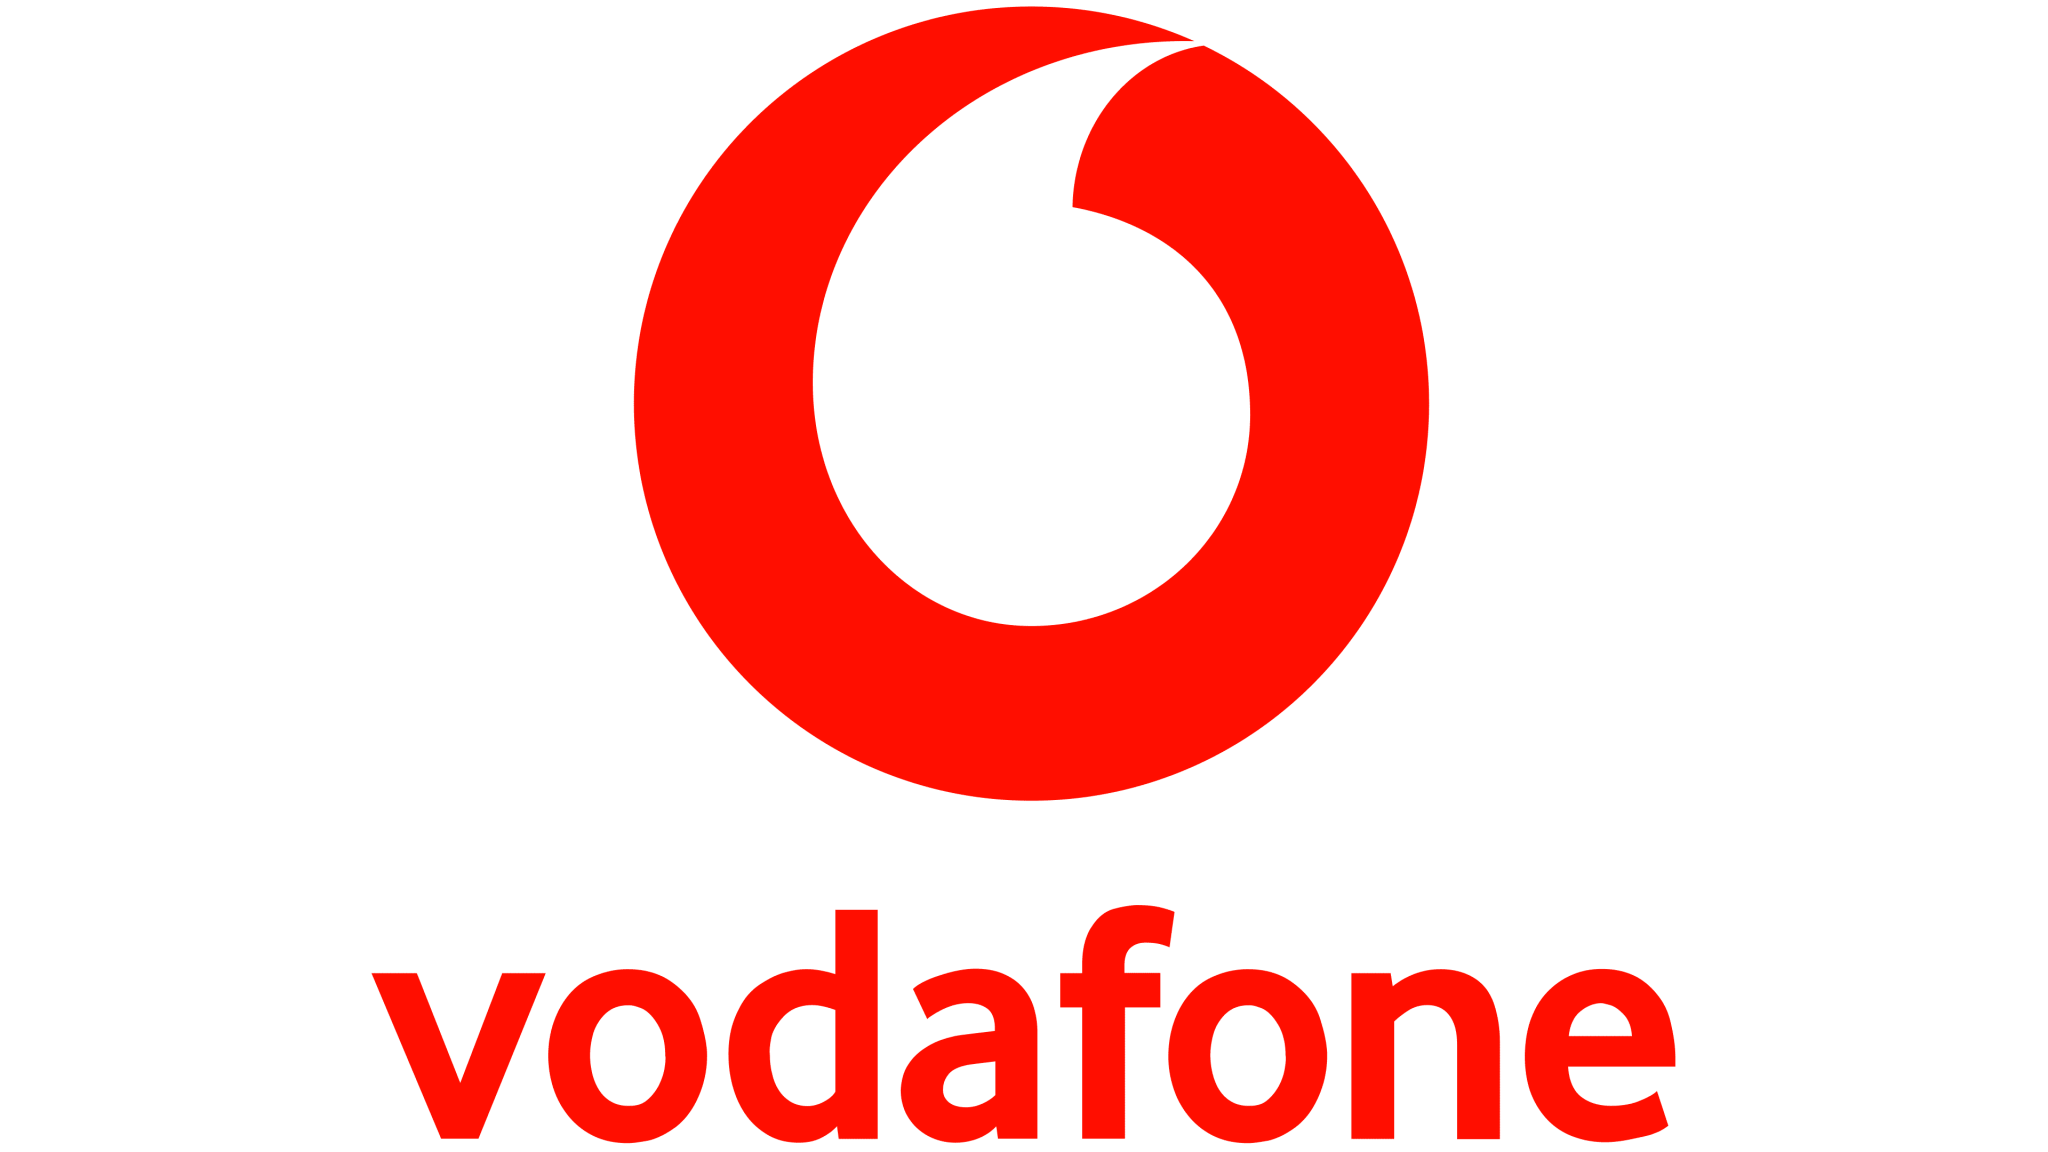 Best Vodafone Australia 4G Apn Settings For Mobile Phone (iPhone and